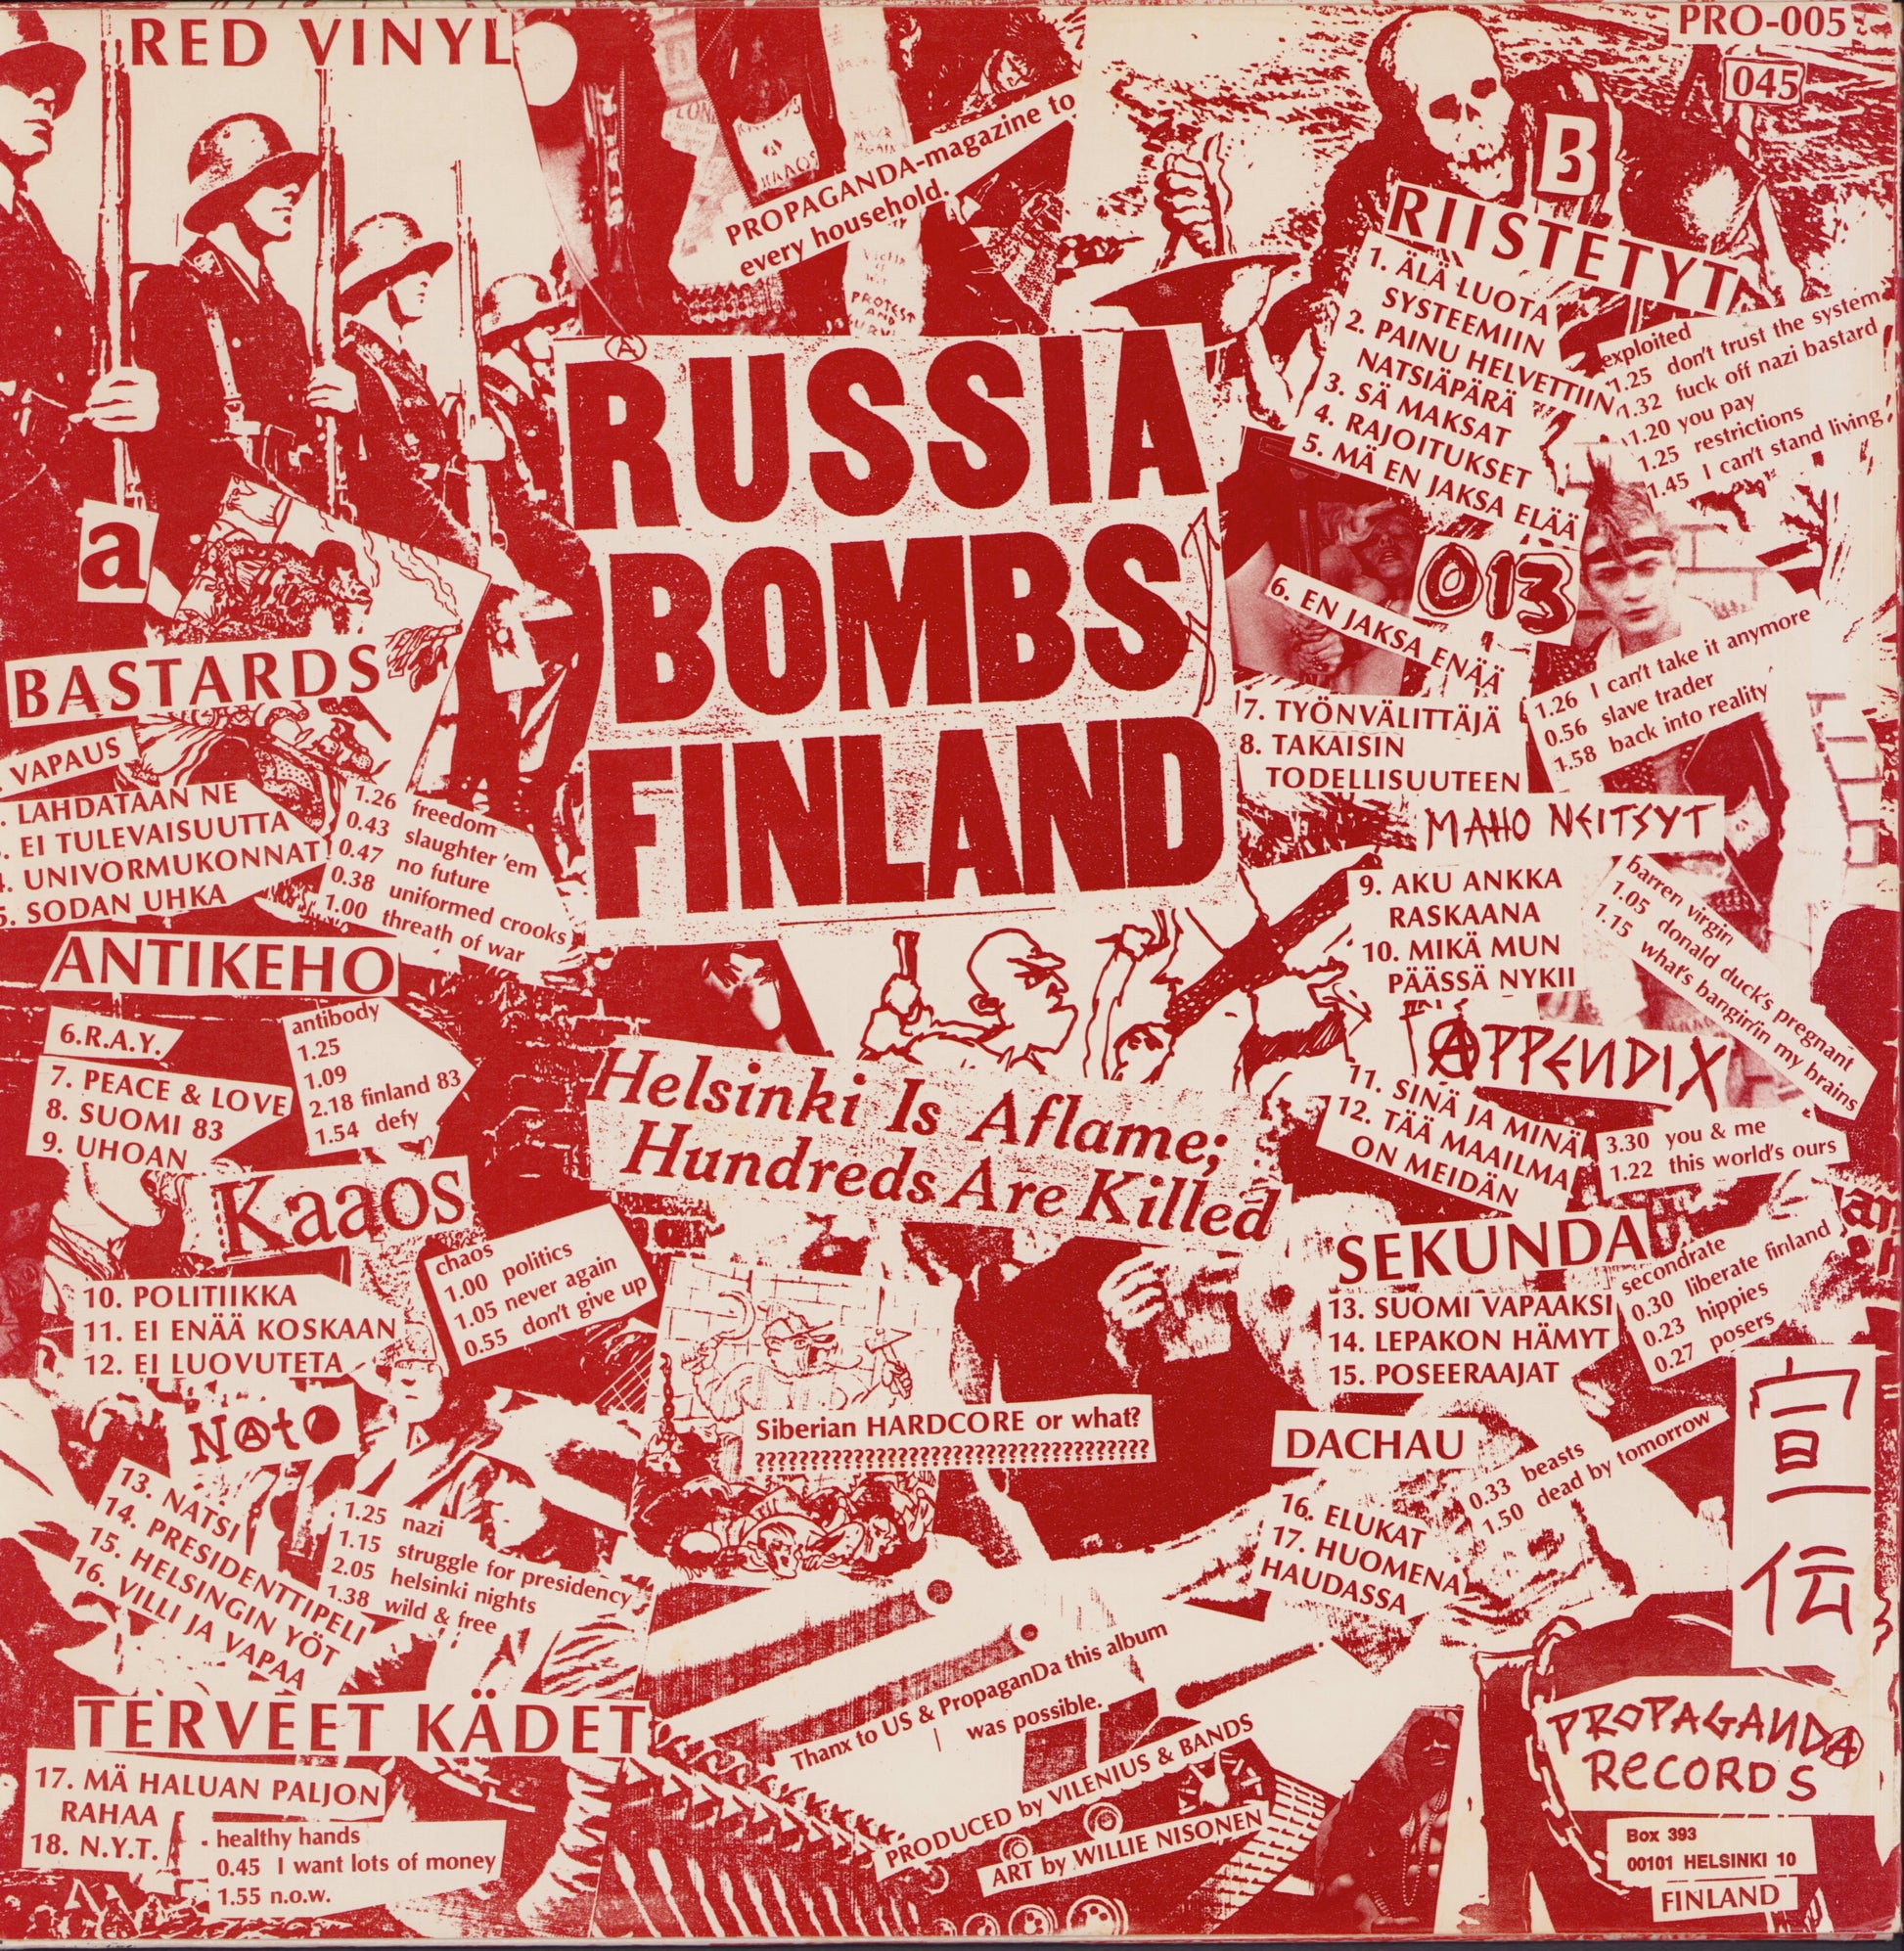 Propaganda - Russia Bombs Finland Red Vinyl LP